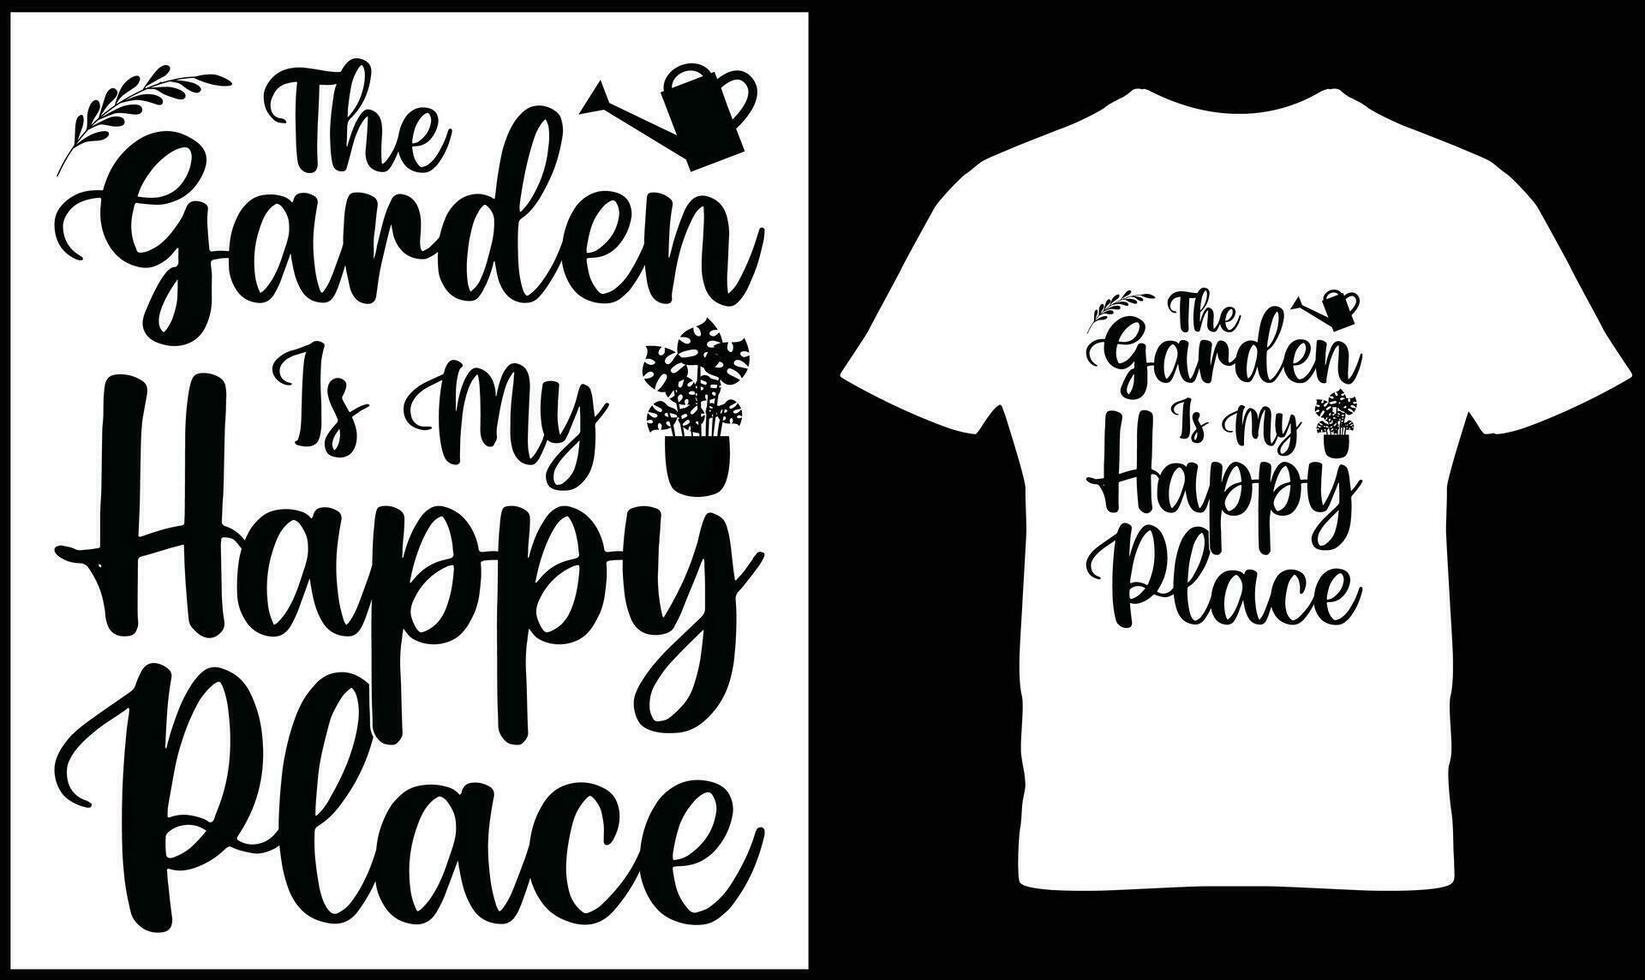 Gardening t-shirt design vector graphic.